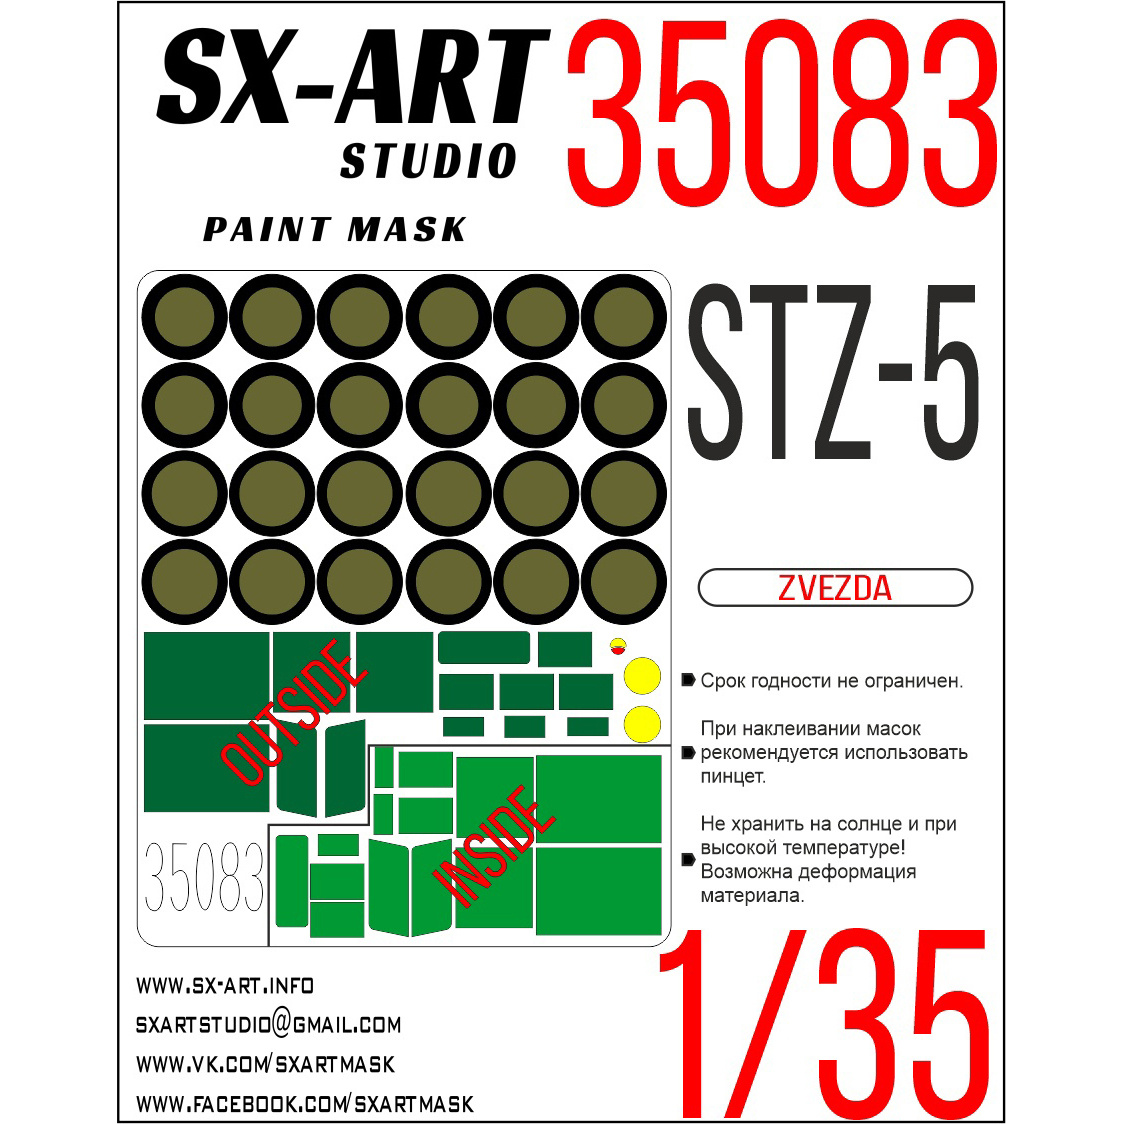 35083 SX-Art 1/35 Paint mask for STZ-5 (Zvezda)